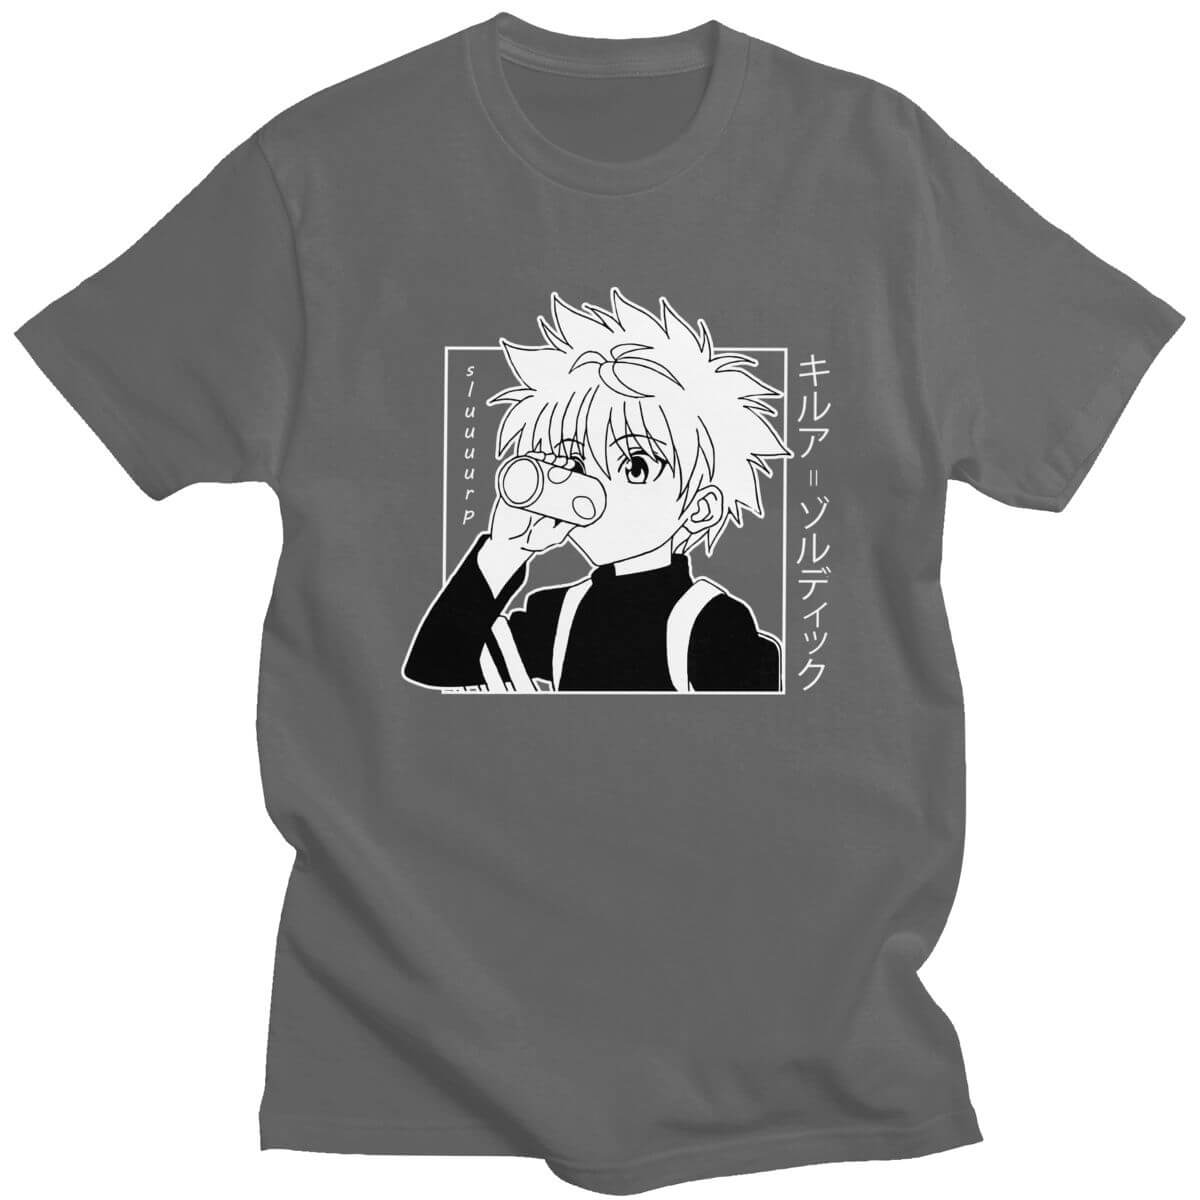 Kawaii Hunter X Hunter Tshirt Men Short Sleeve Killua Zoldyck T-shirt Crew Neck Fitted Soft Cotton Anime Manga Tee Shirt Clothes